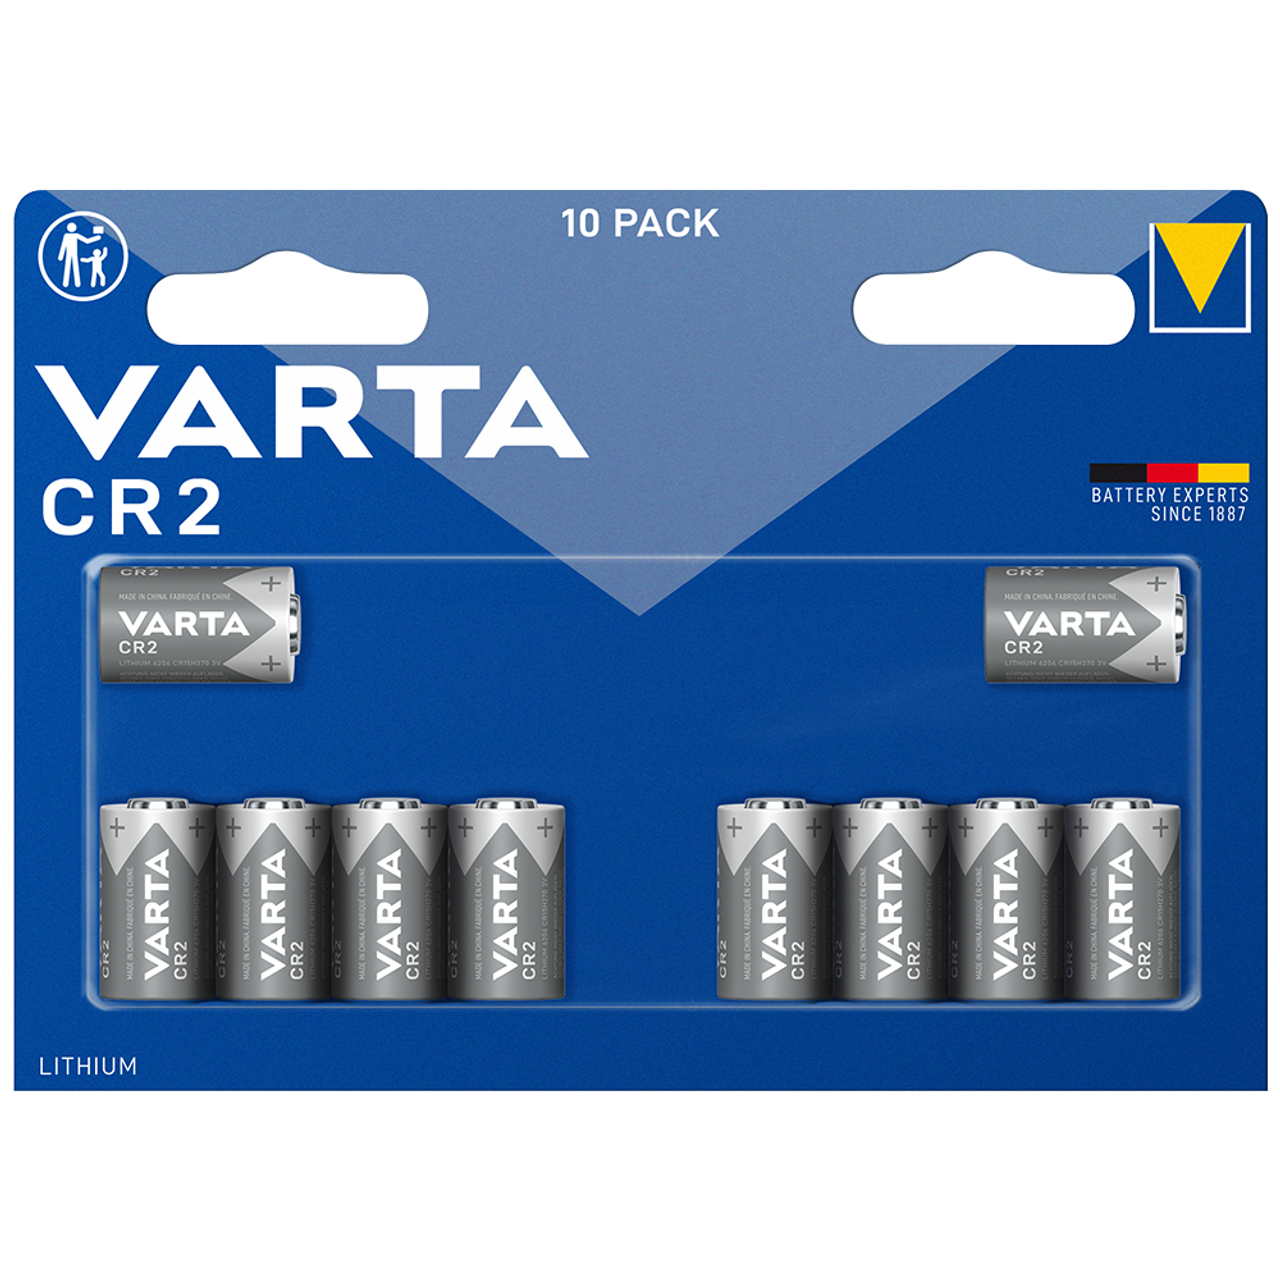 Varta CR2 Lithium Batteries